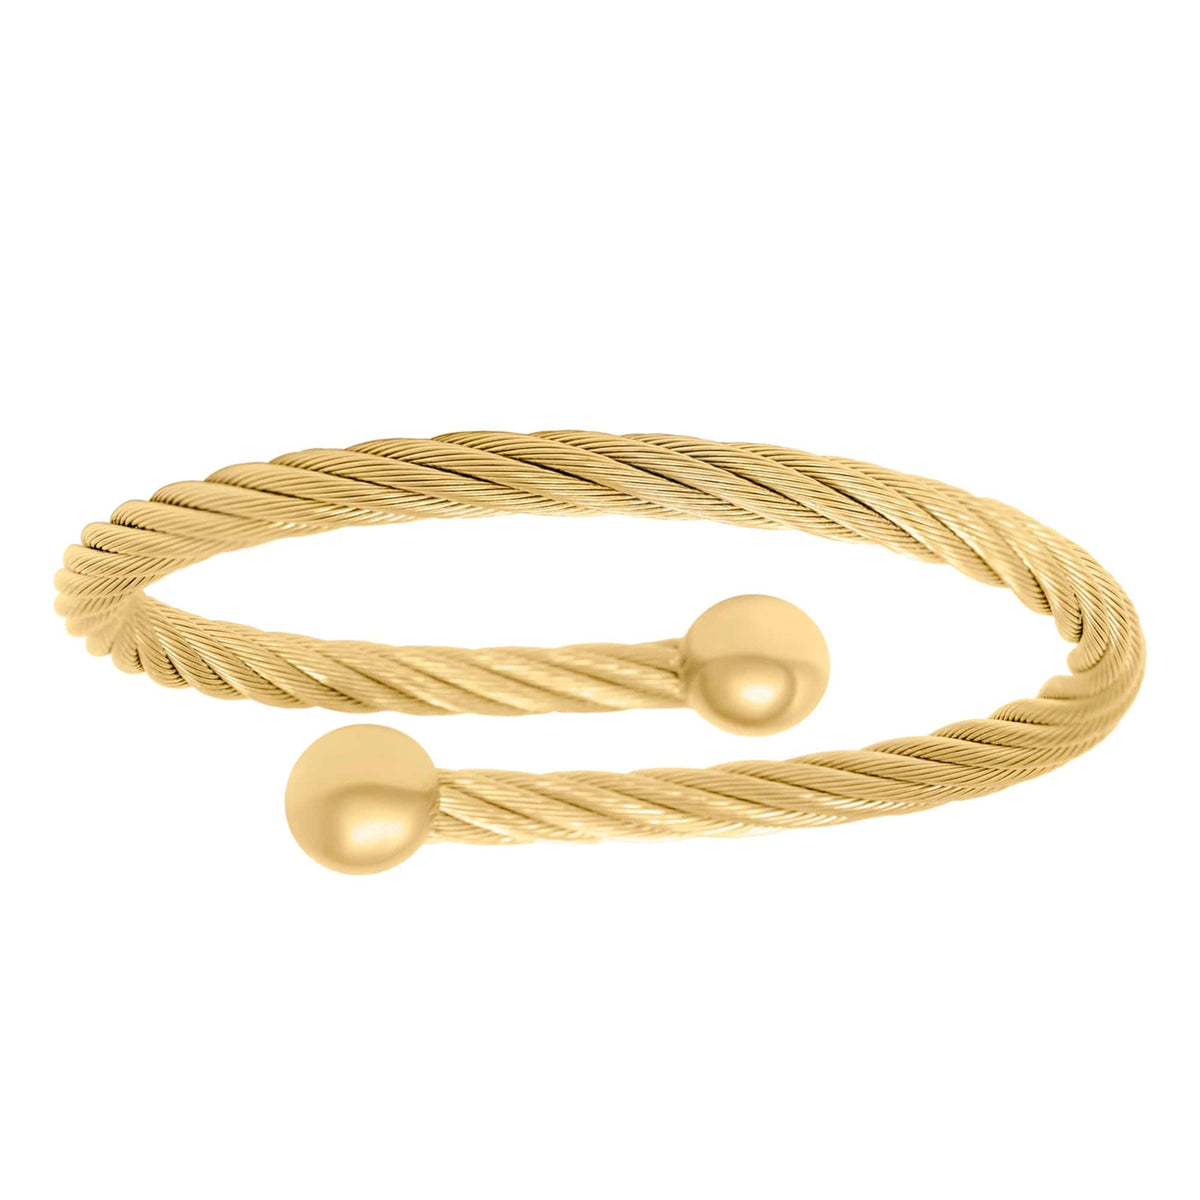 BohoMoon Stainless Steel Remi Cuff Bracelet Gold